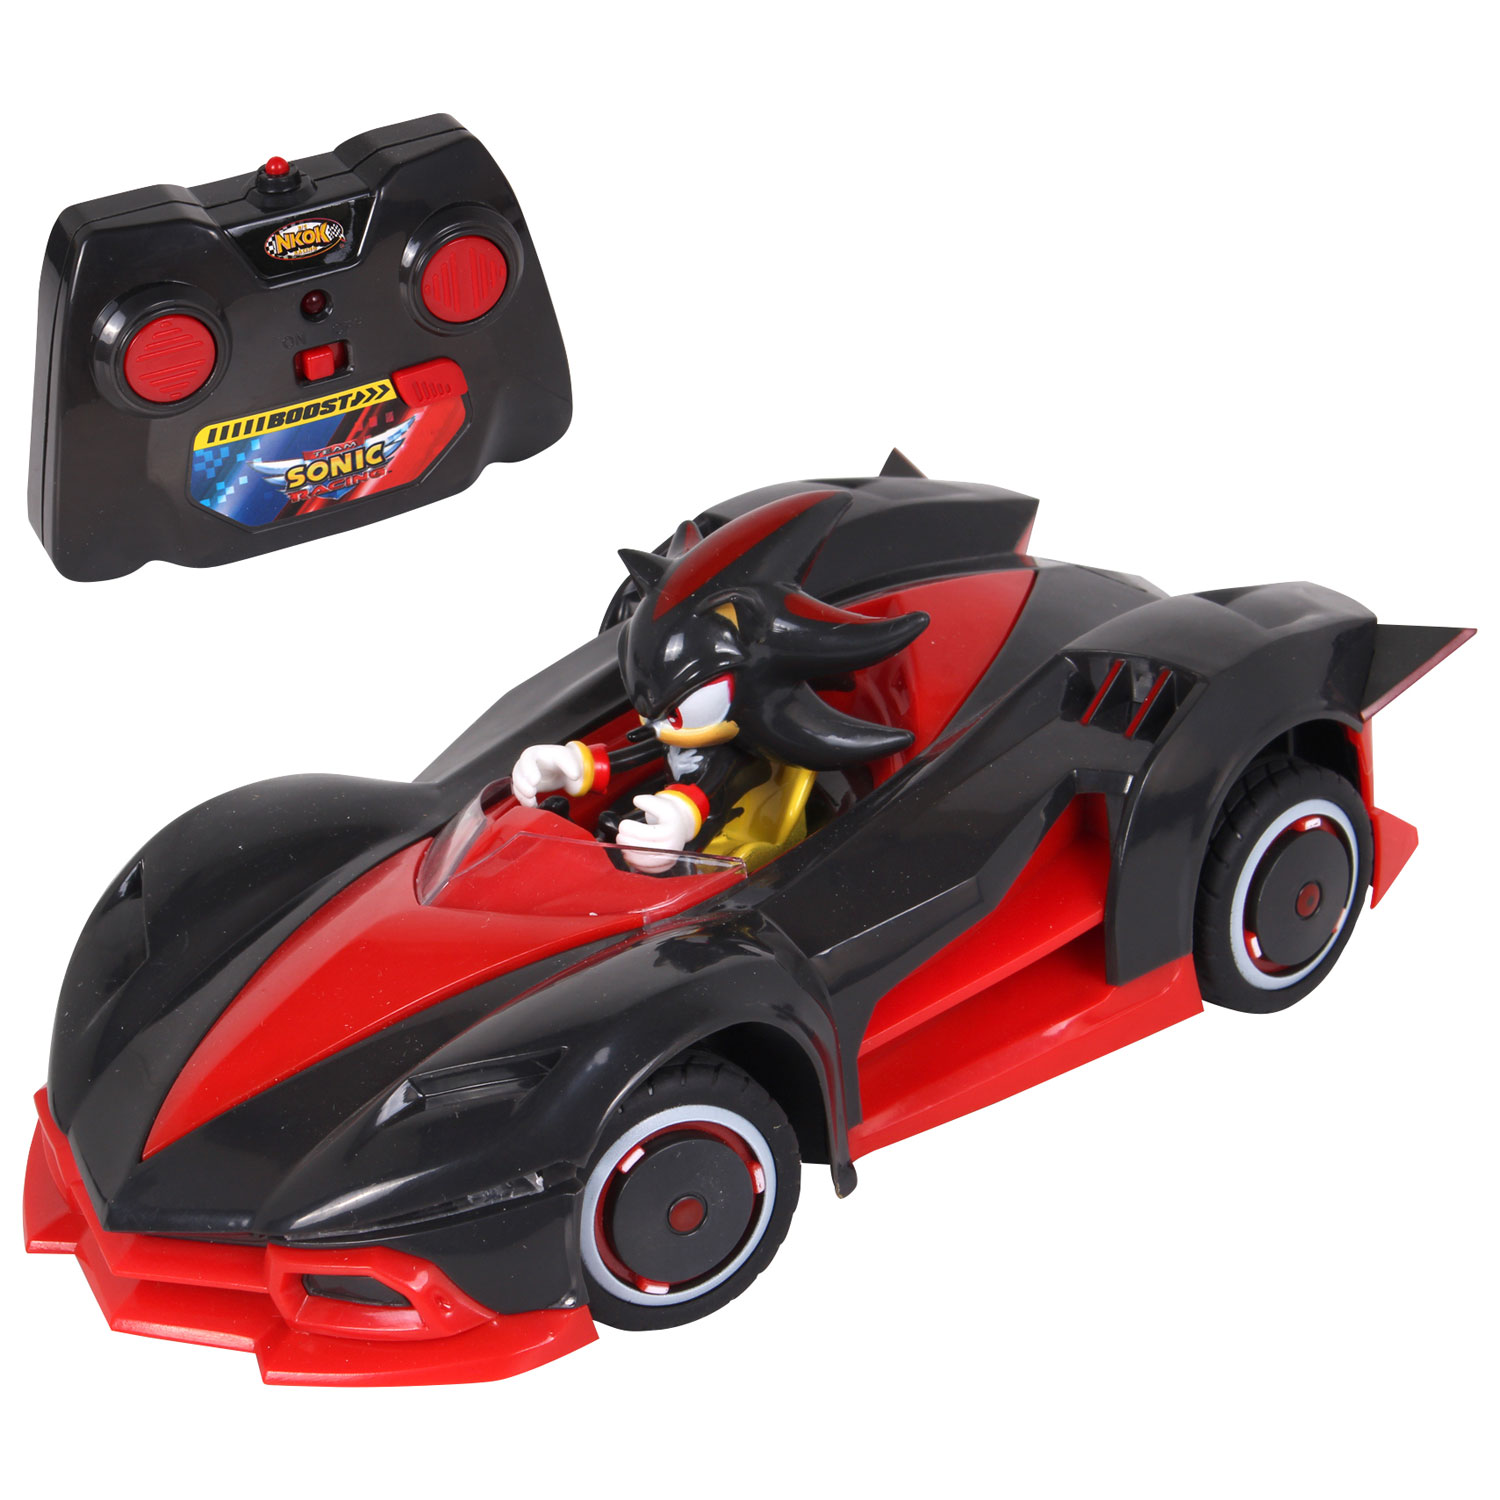 NKOK Sonic The Hedgehog Shadow RC Car (602) - Red/Black